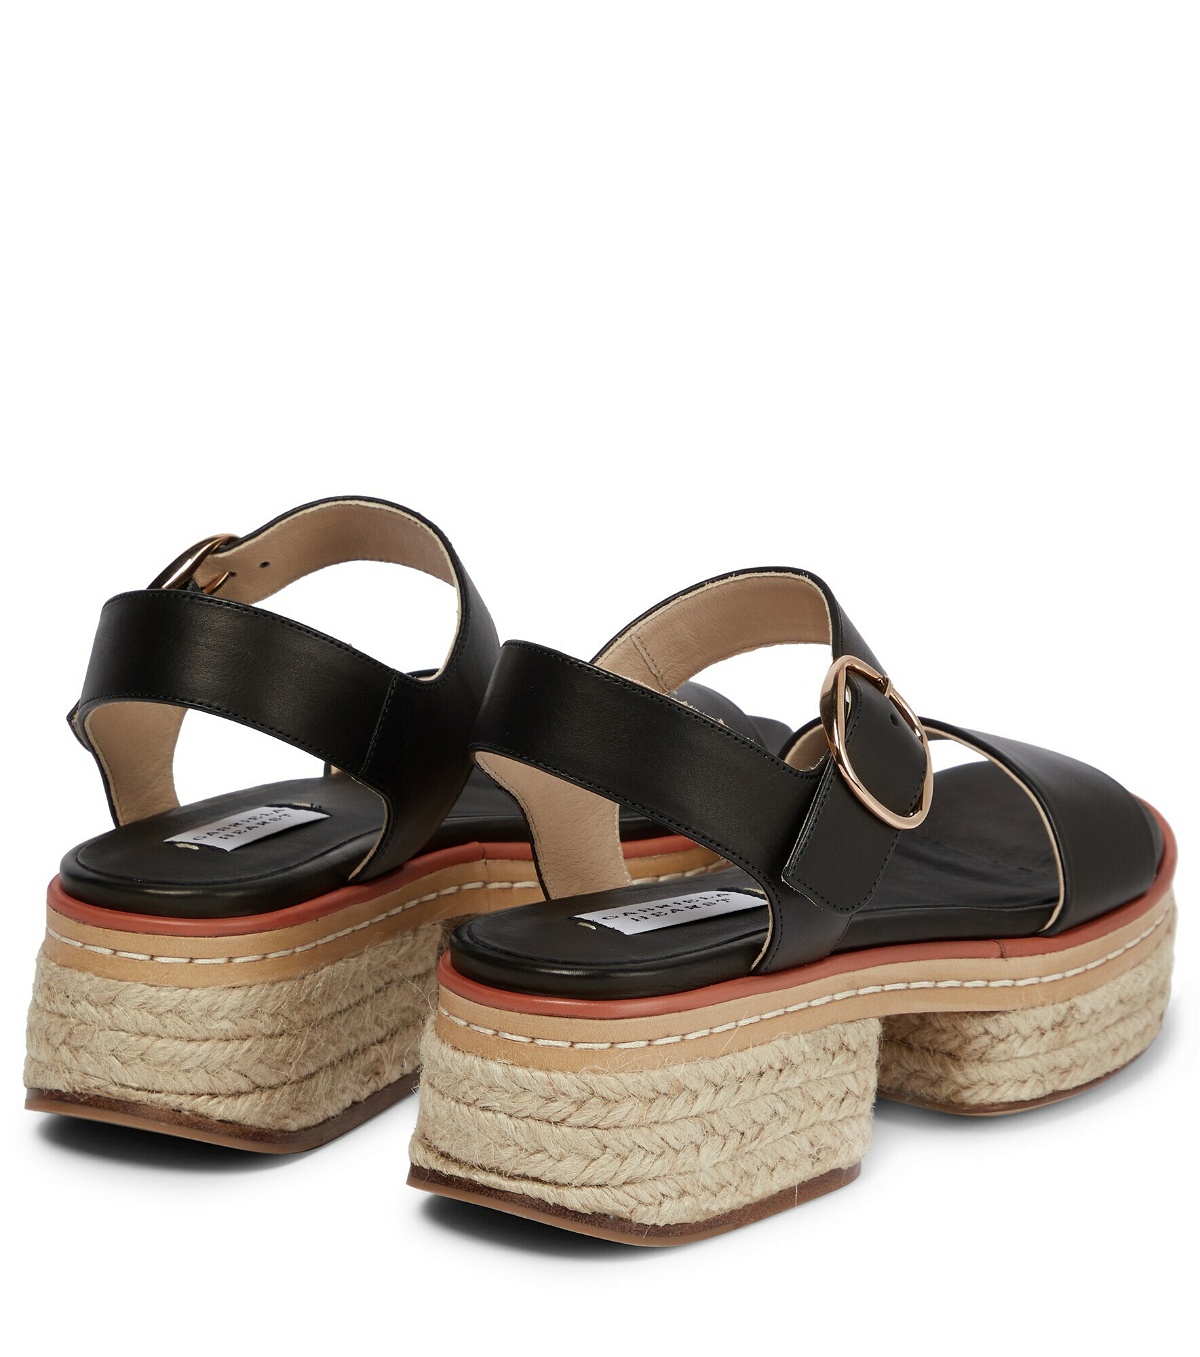 Gabriela Hearst - Ryka leather espadrille sandals Gabriela Hearst